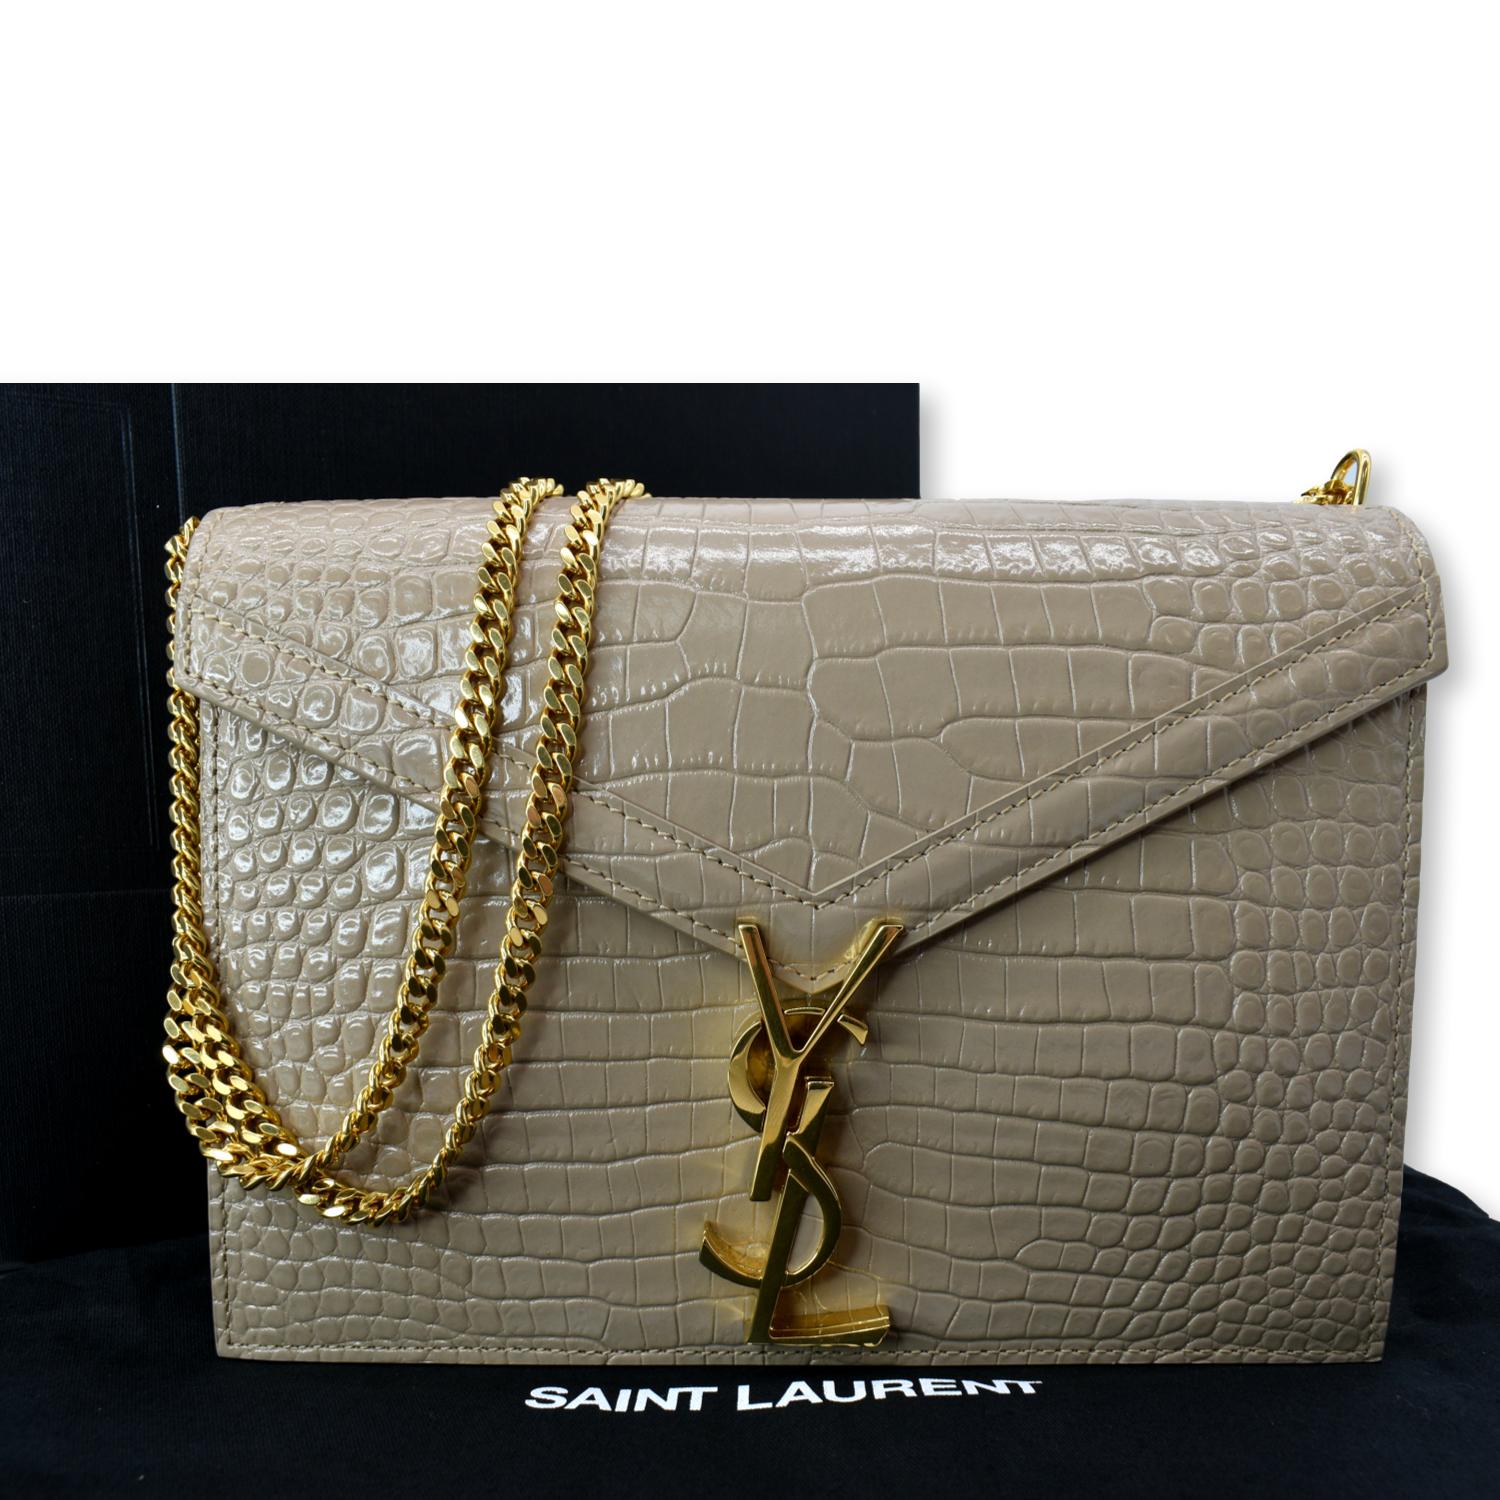 Saint Laurent Medium Envelope Bag In Tan - Dark Beige